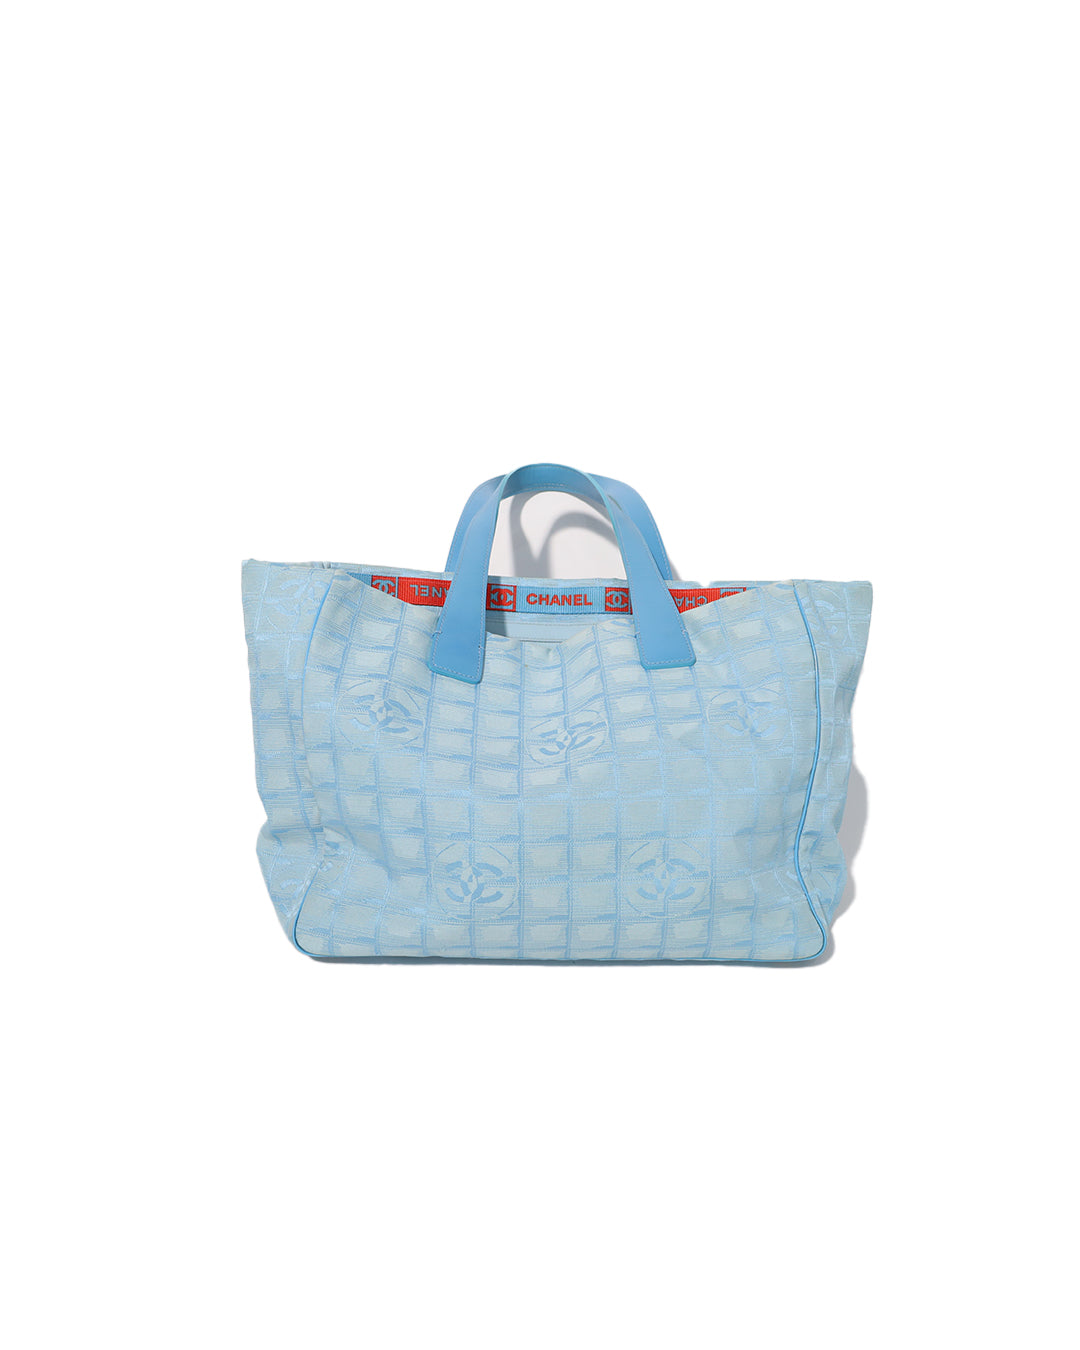 Authentic Chanel Travel Line light Blue Jacquard Nylon Tote Bag